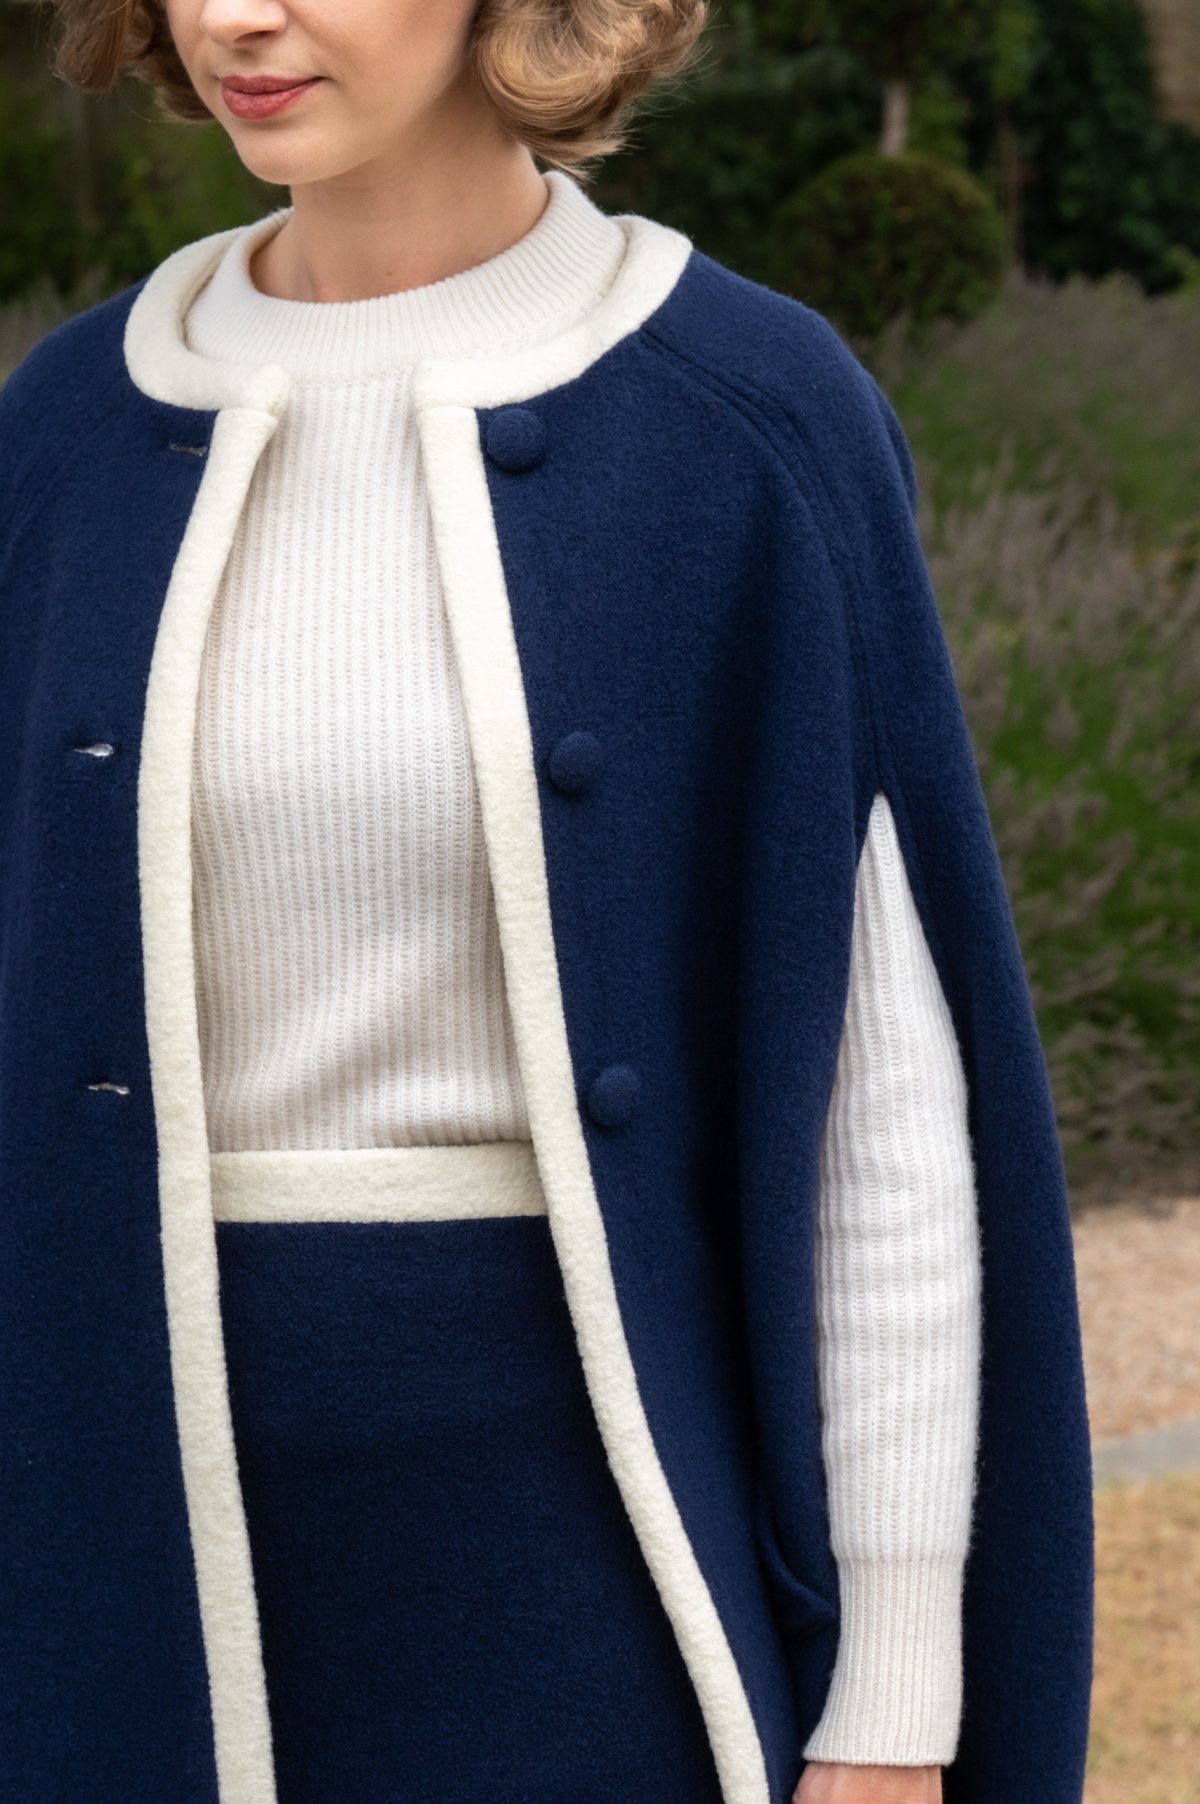 Stacie Flinner x Marta Scarampi Collaboration Slow Fashion Sweater and Skirt-12.jpg